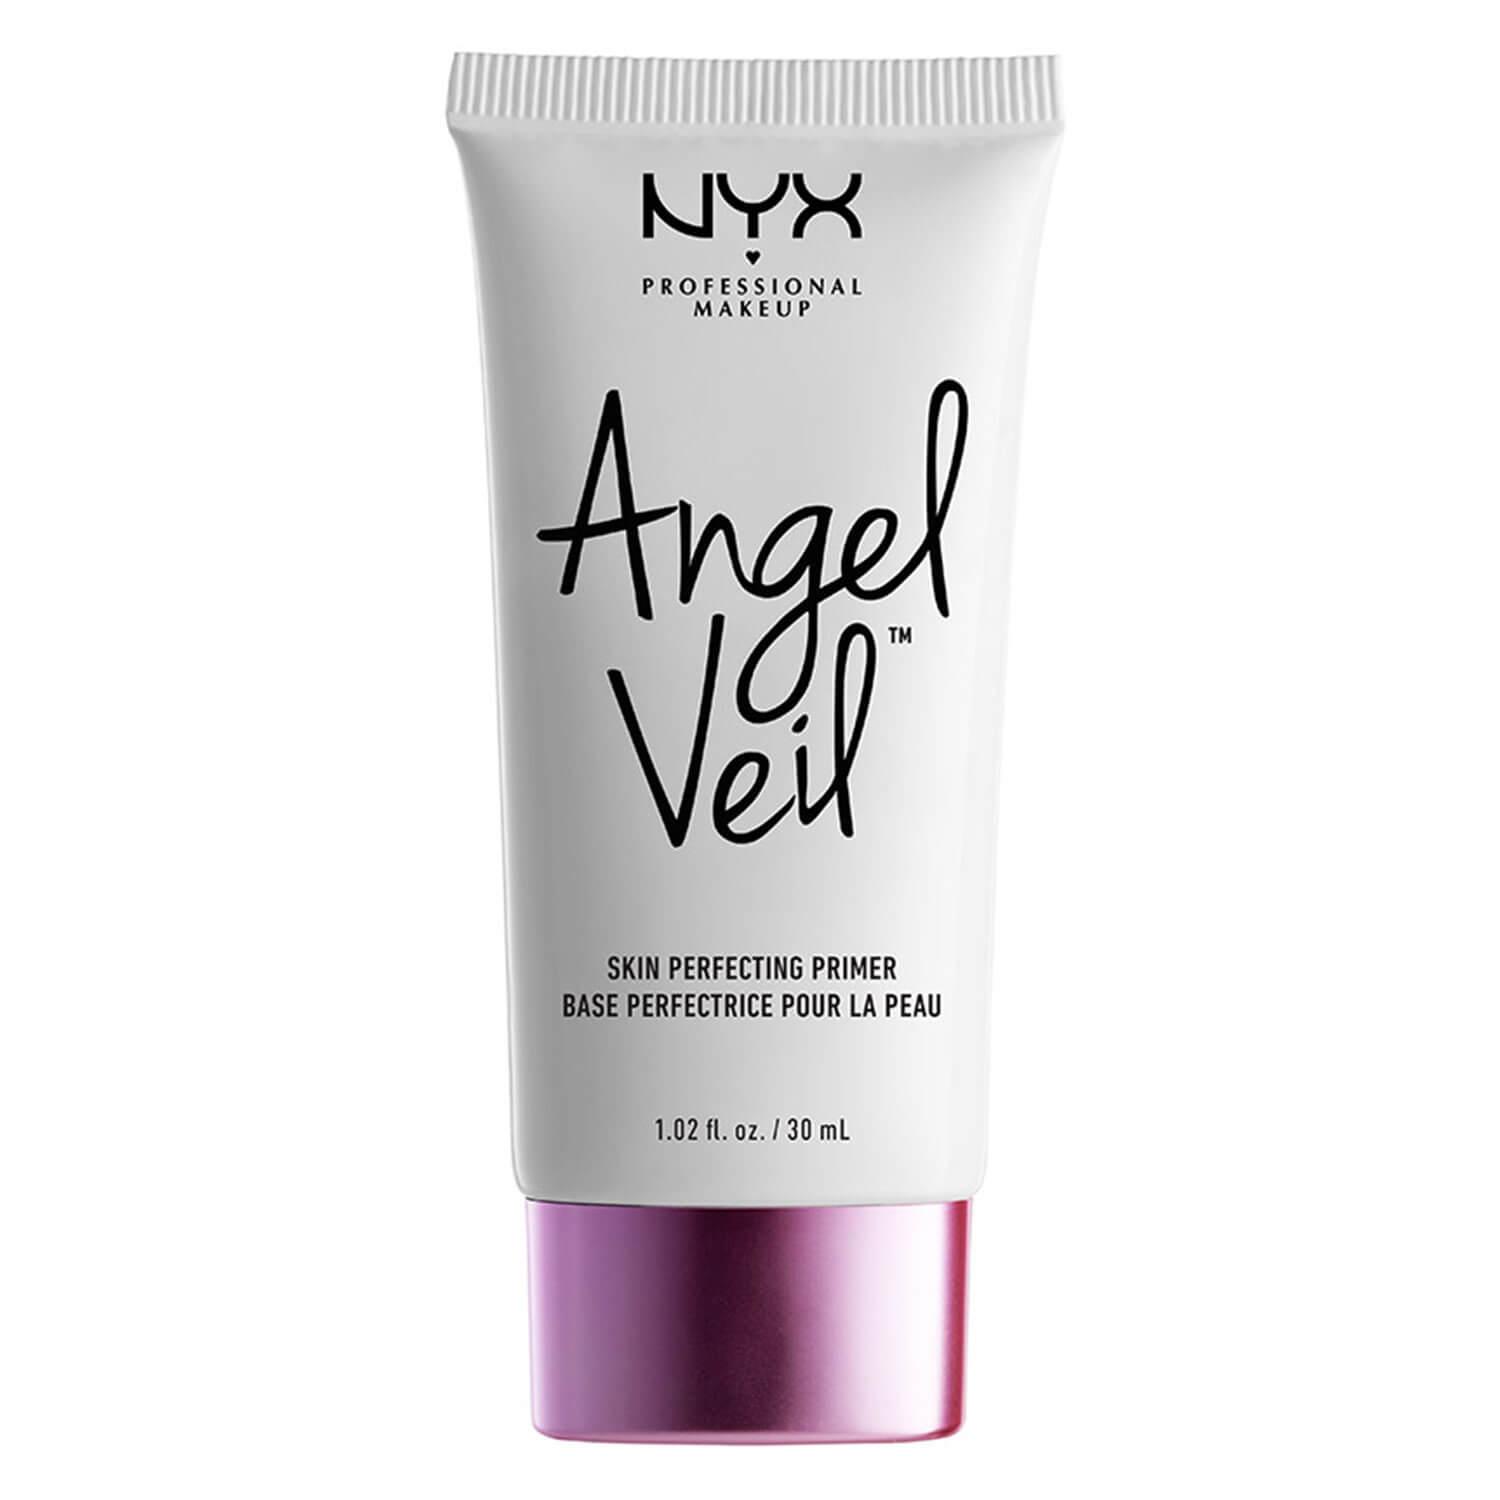 NYX Primer - Angel Veil Skin Perfecting Primer